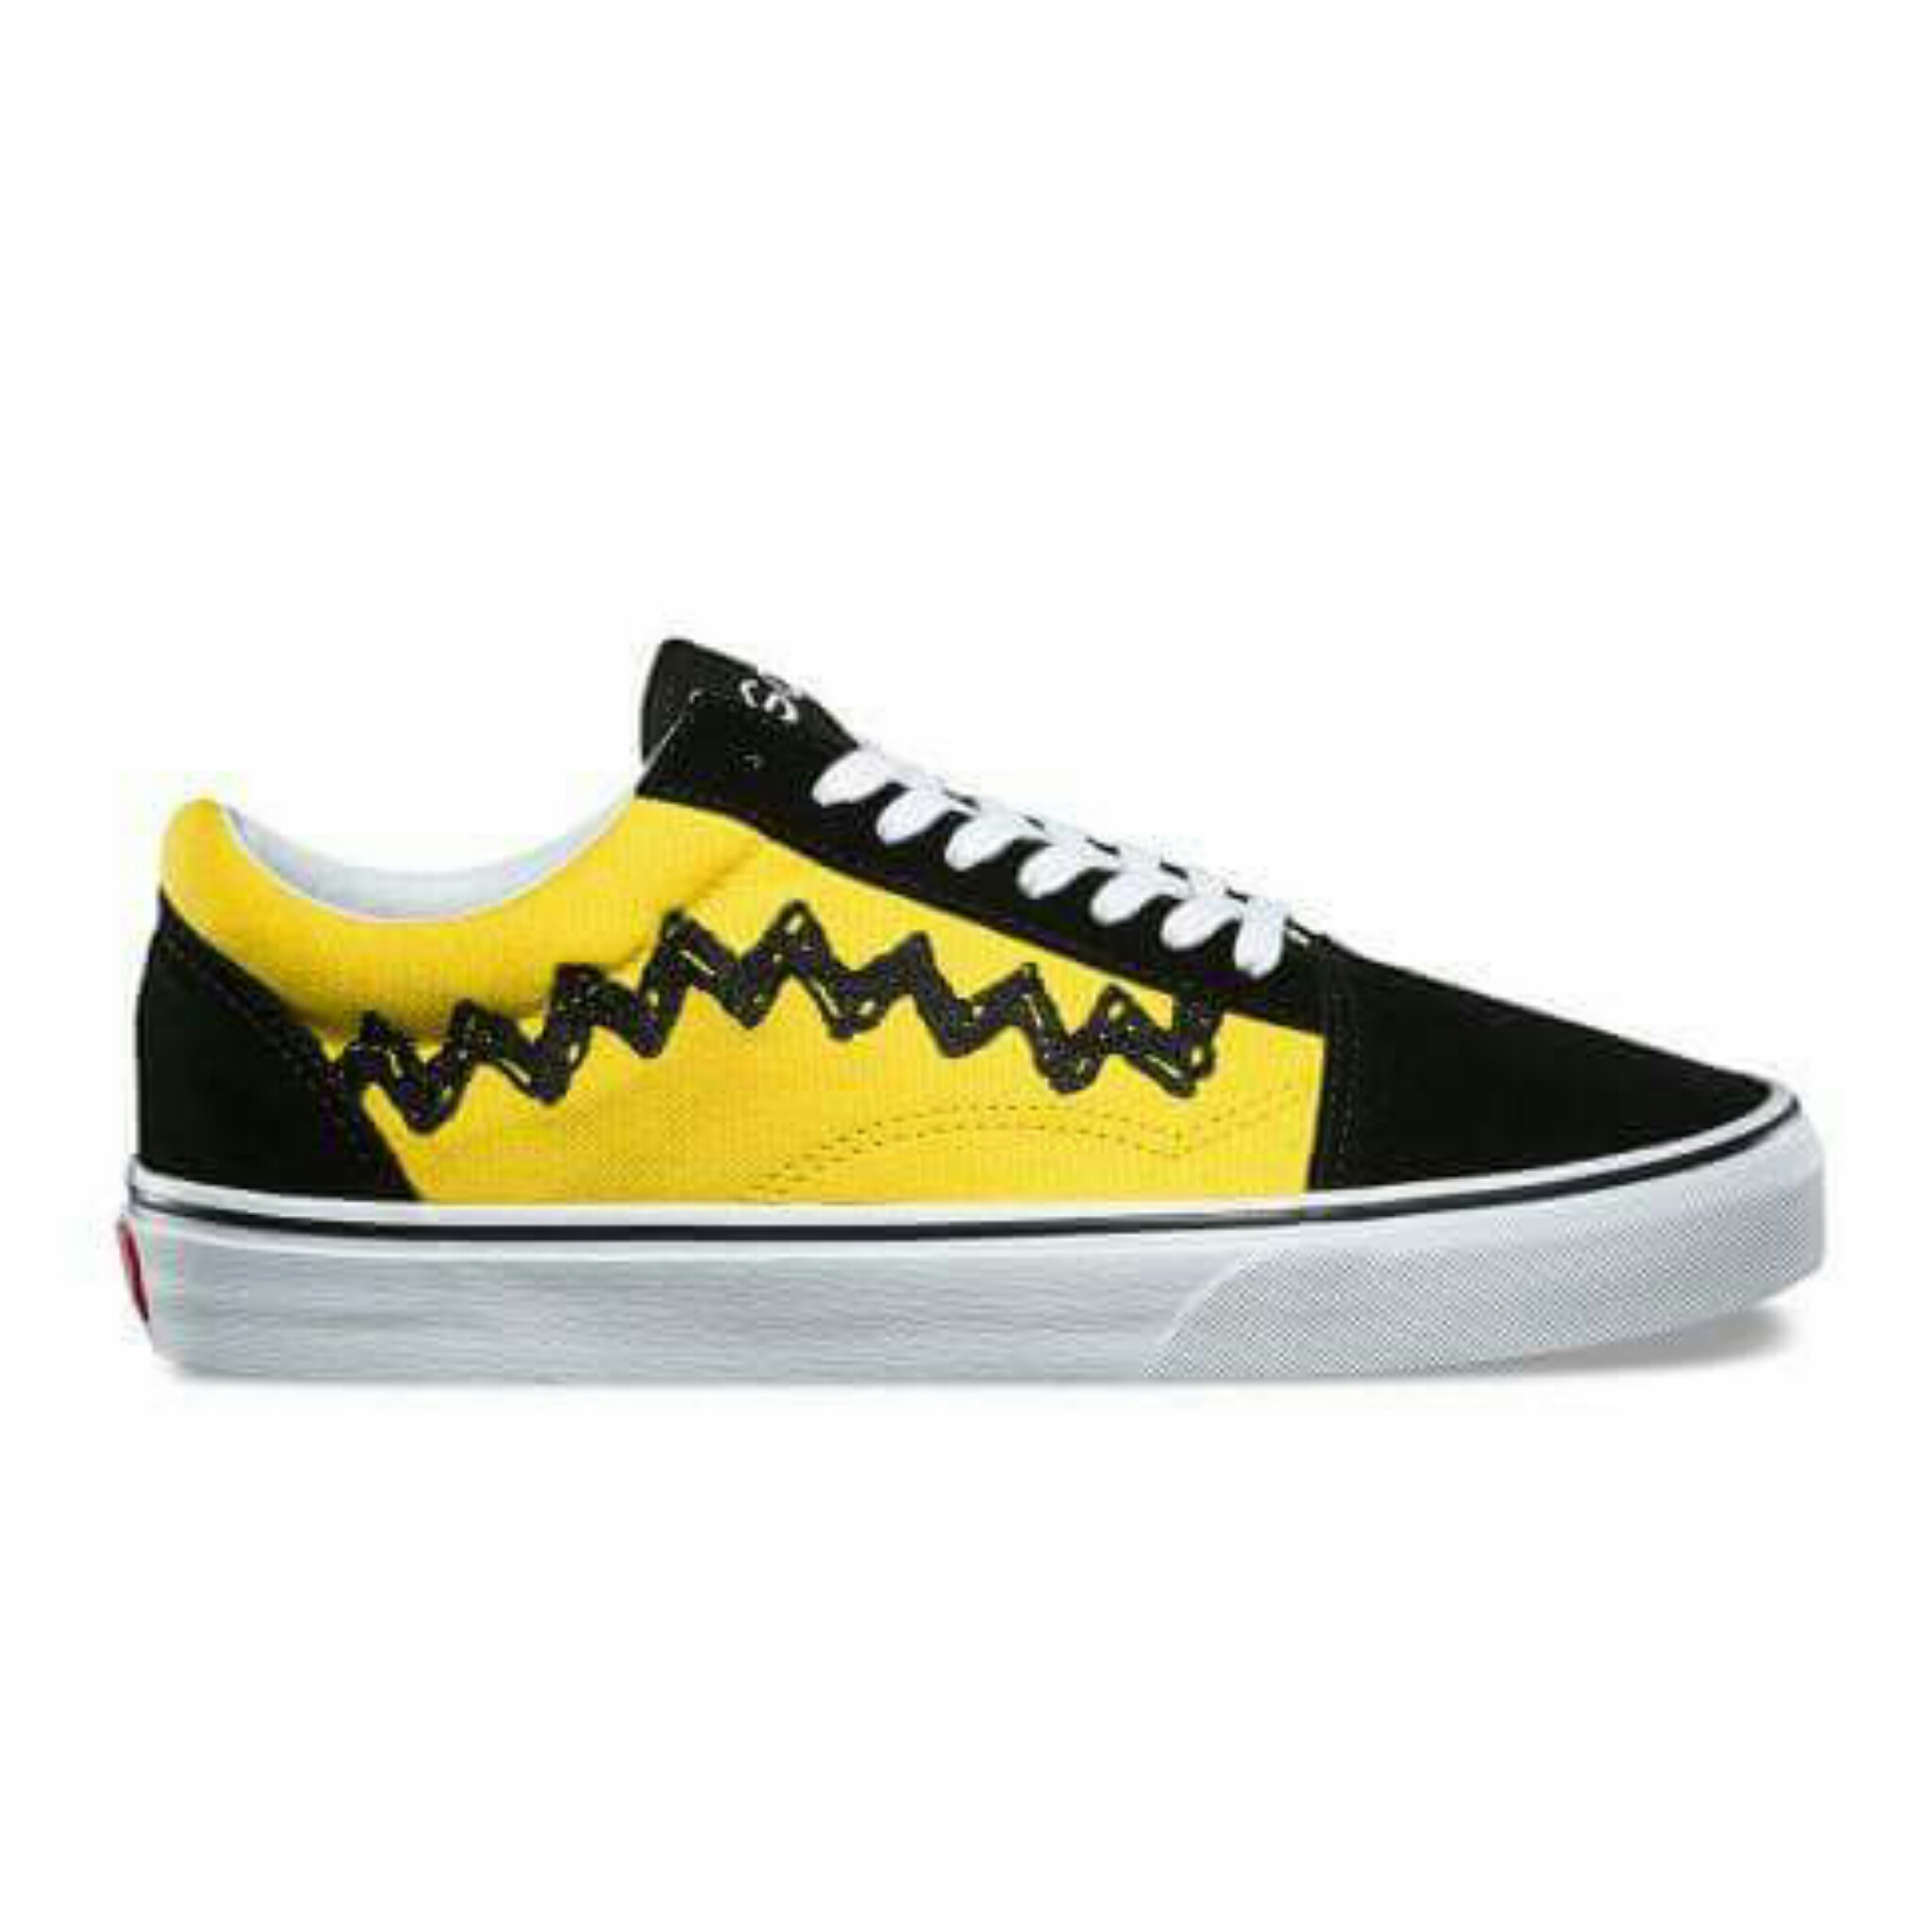 Vans Shoes Yellow Black Online Sale, UP 